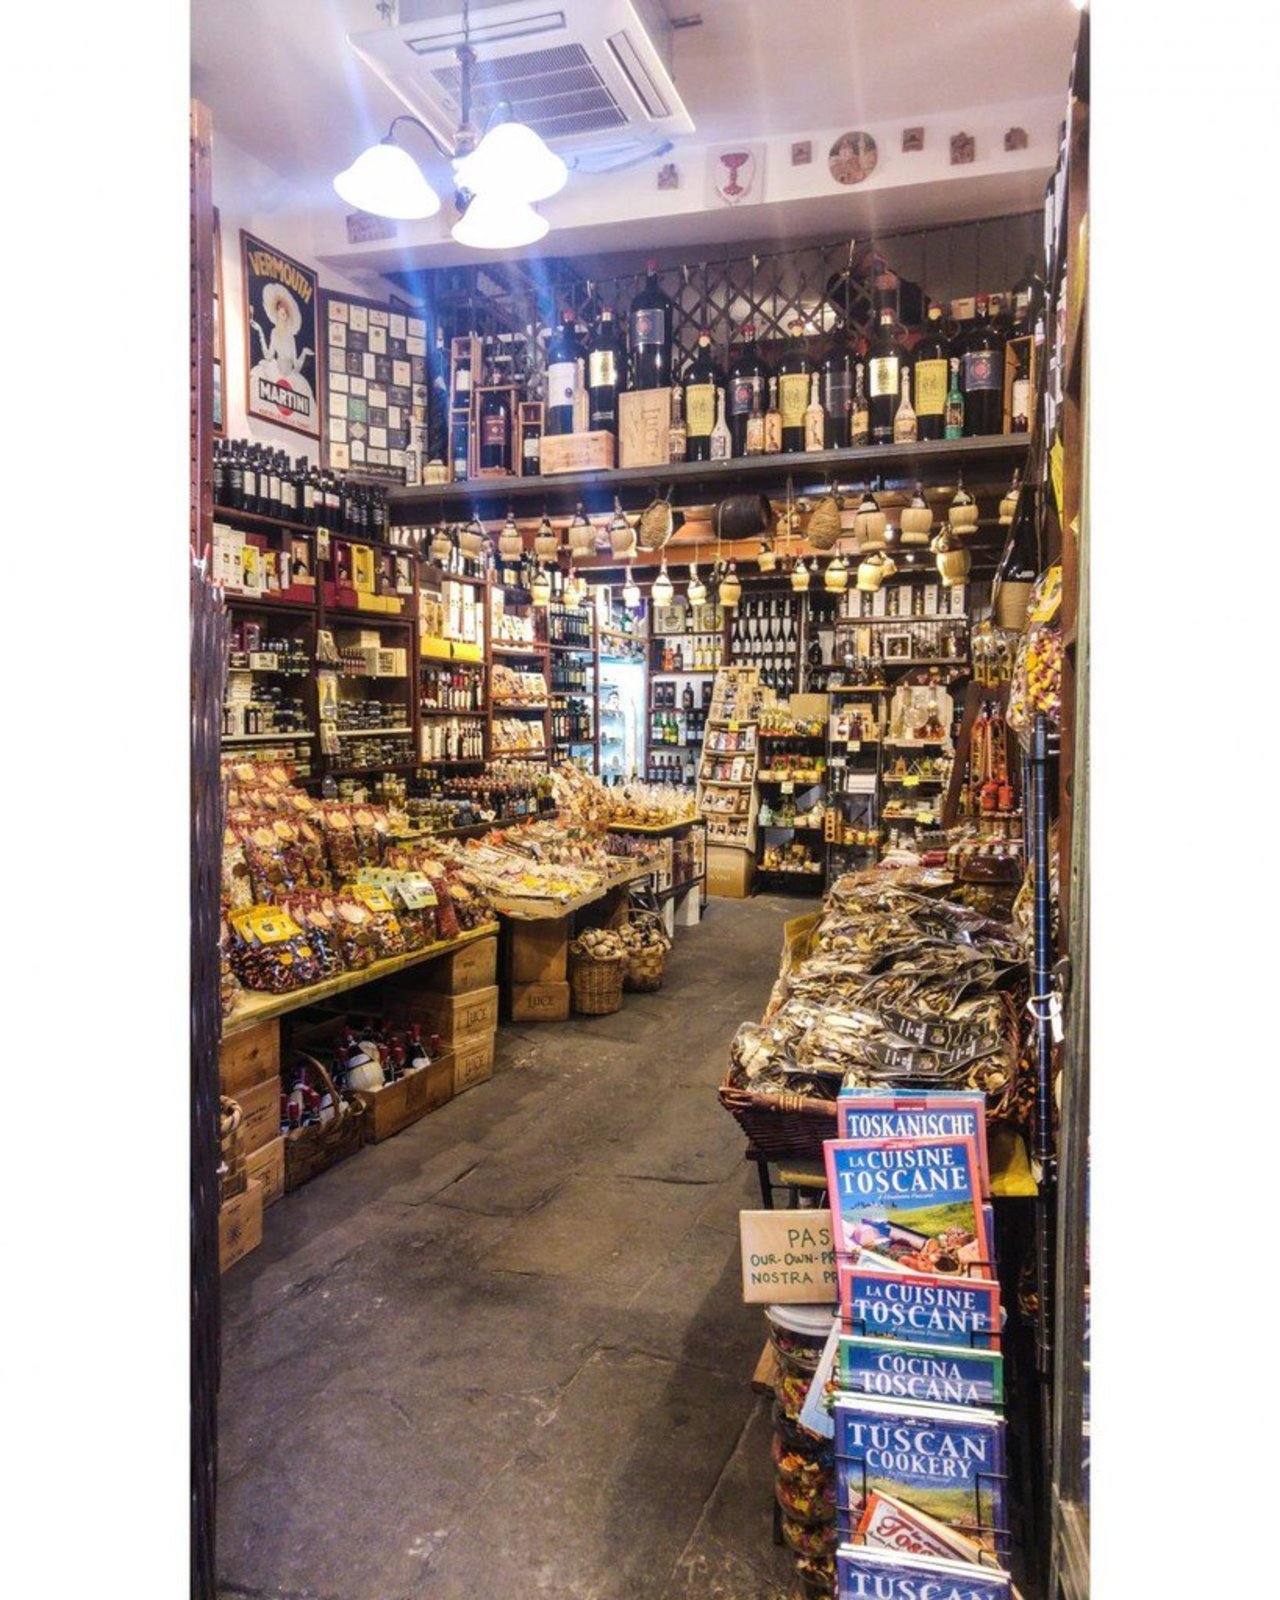 Food shop in Florence#wishversilia #tuscany #travel #travelpics #instatravel #instavacati… http://ift.tt/2mh3s9L https://t.co/G8MRupWaiY